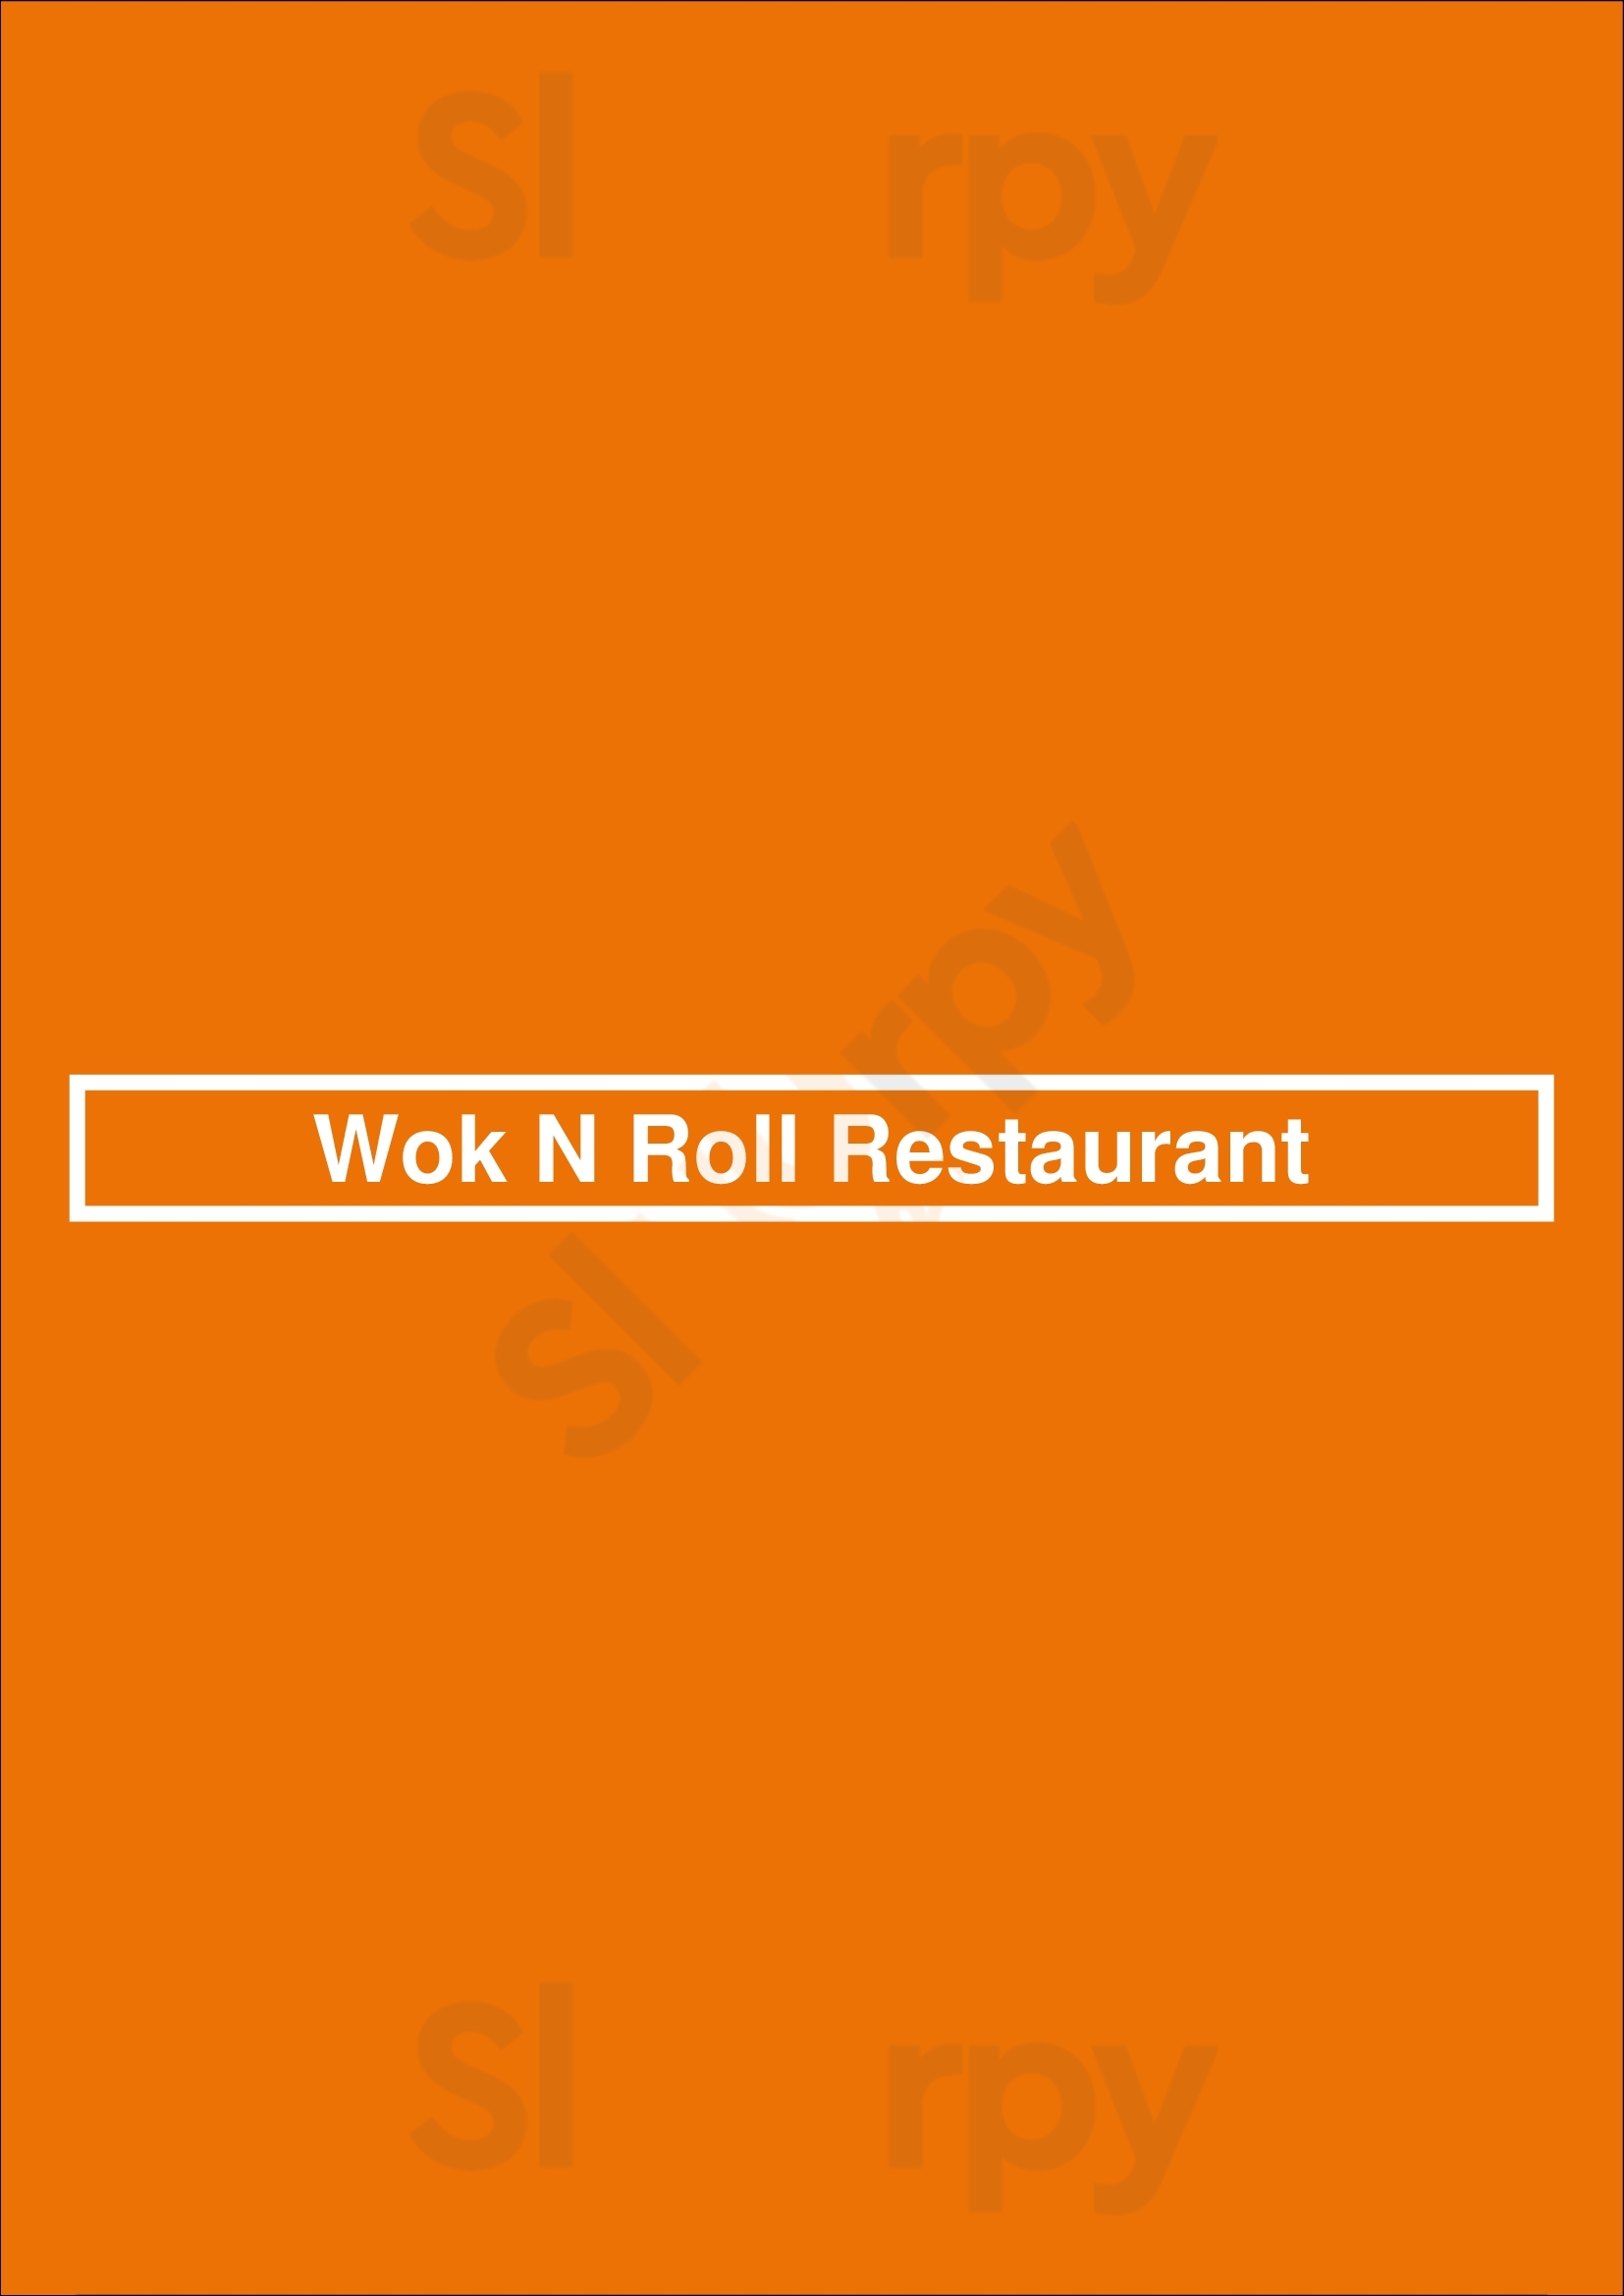 Wok N Roll Restaurant Edmonton Menu - 1